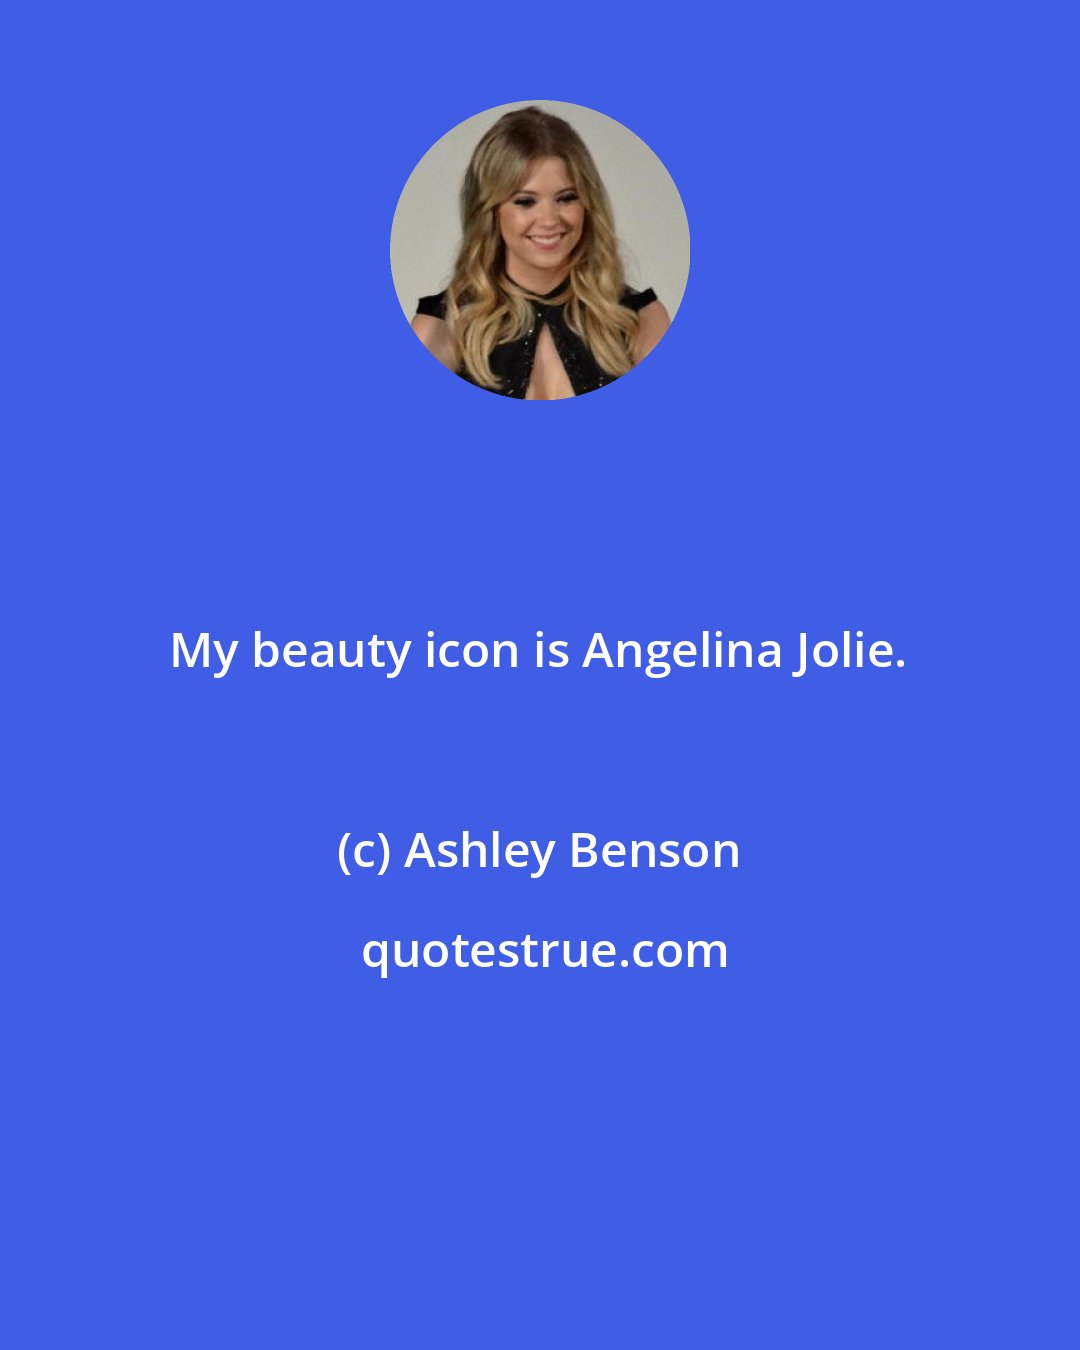 Ashley Benson: My beauty icon is Angelina Jolie.